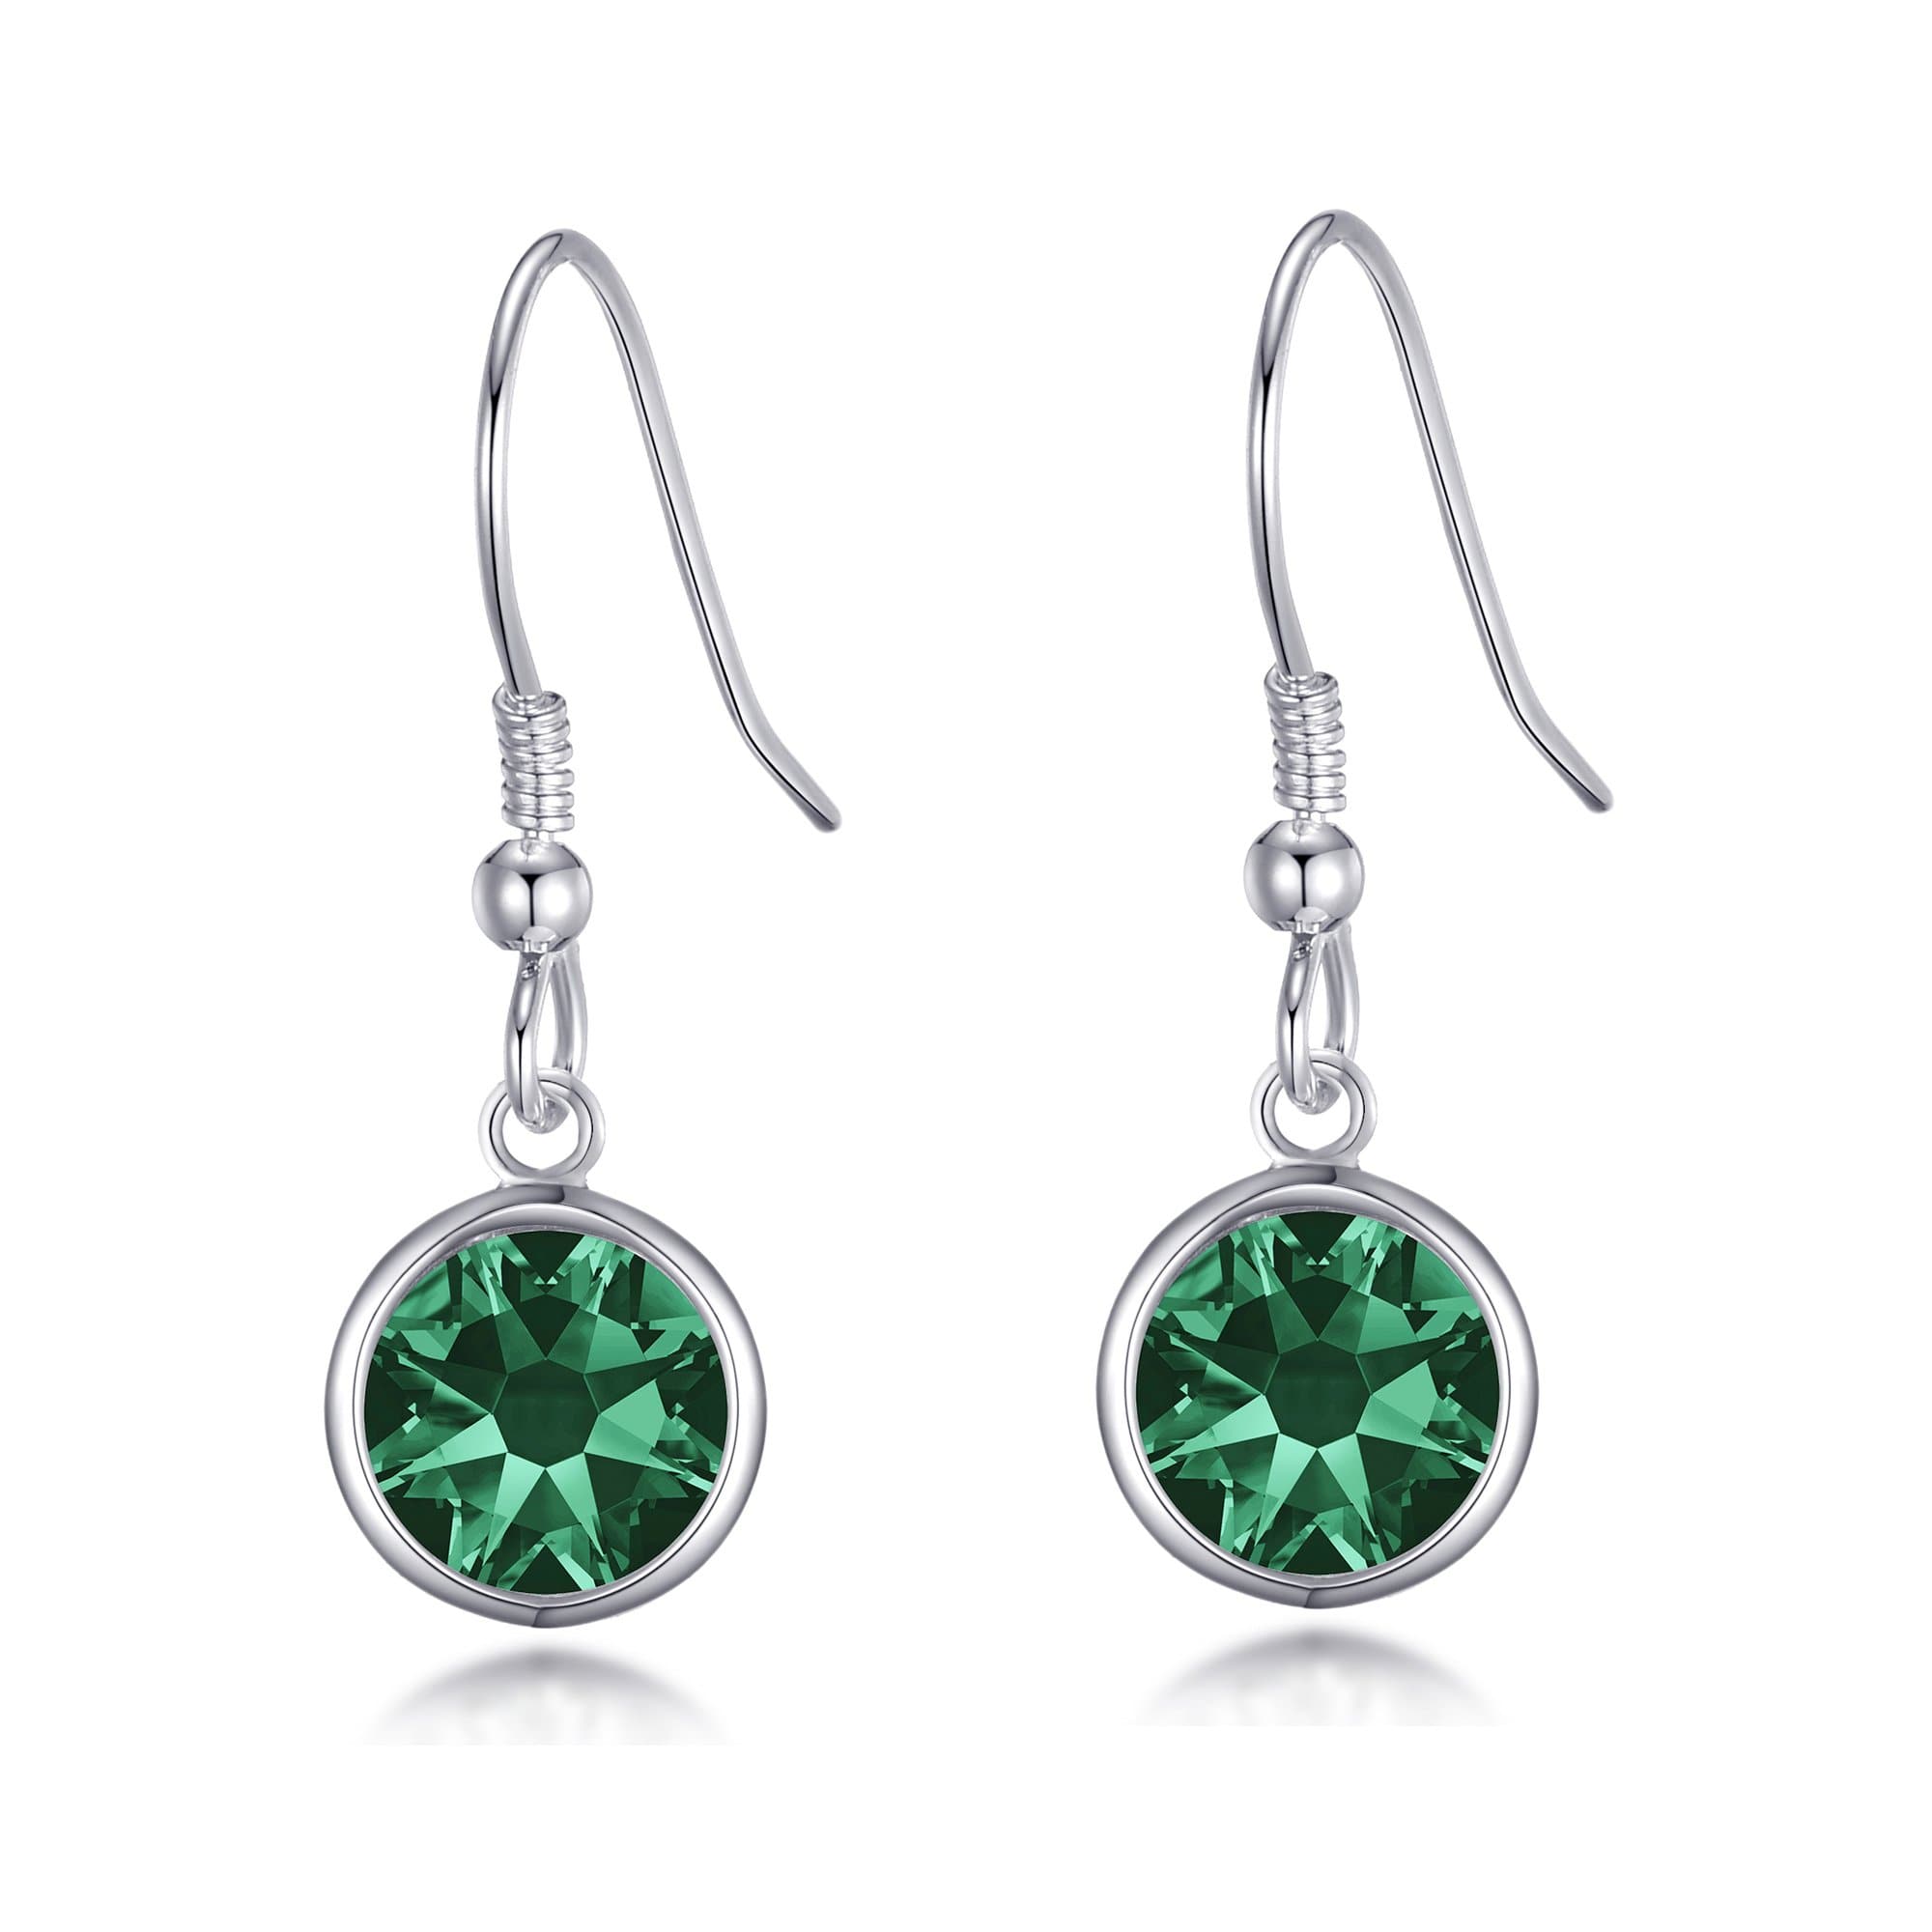 Green Crystal Drop Earrings Created with Zircondia® Crystals by Philip Jones Jewellery